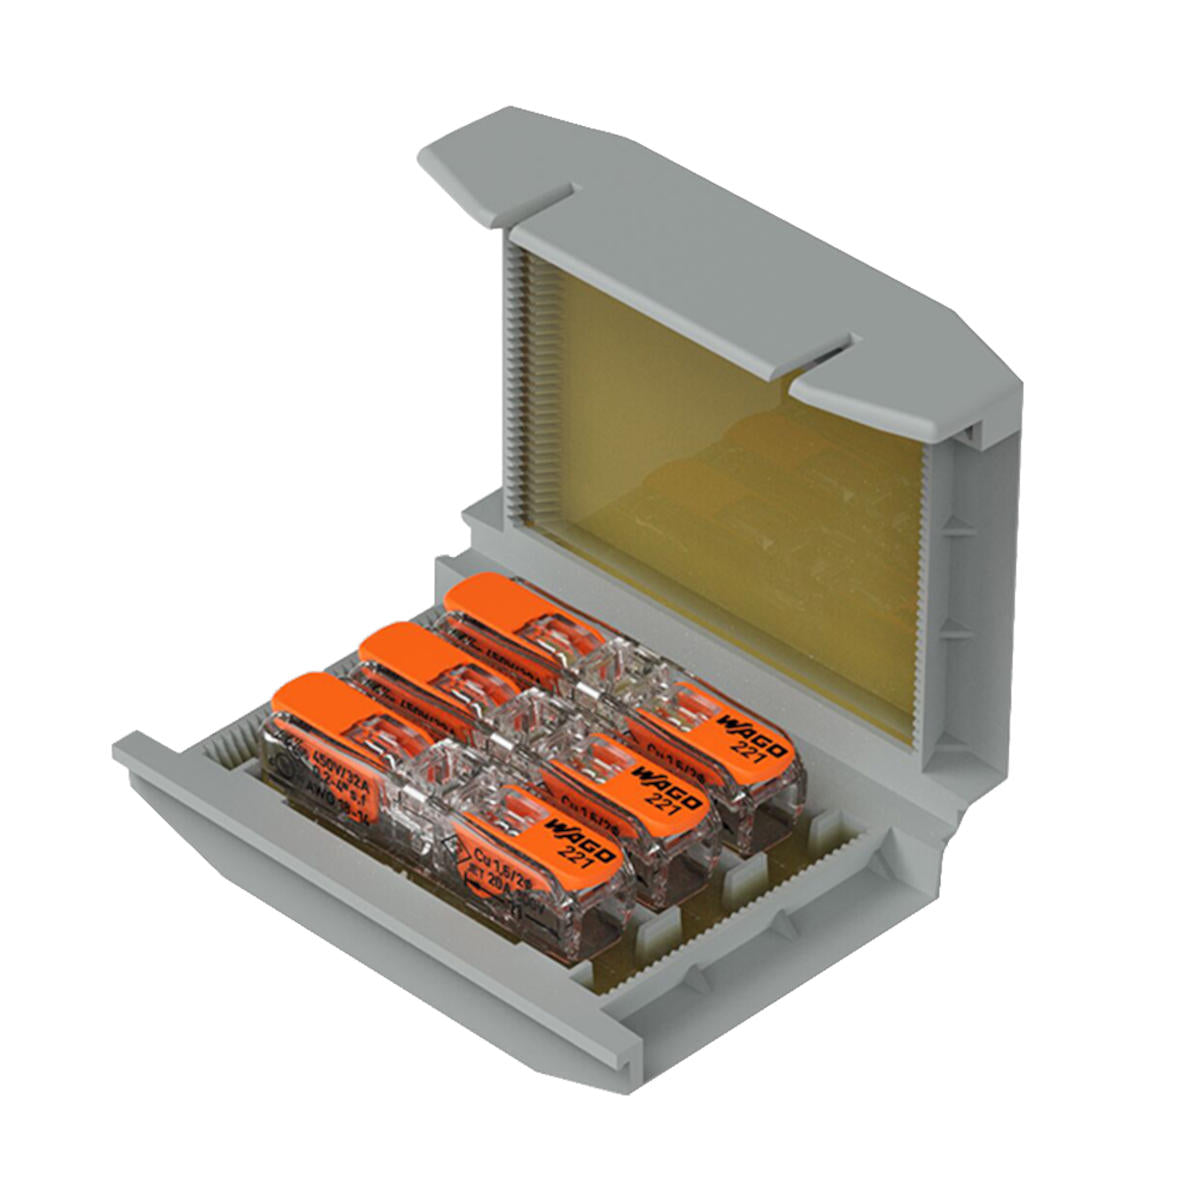 WAGO : Gelbox pour domino (anti-rouille et usure) taille 1